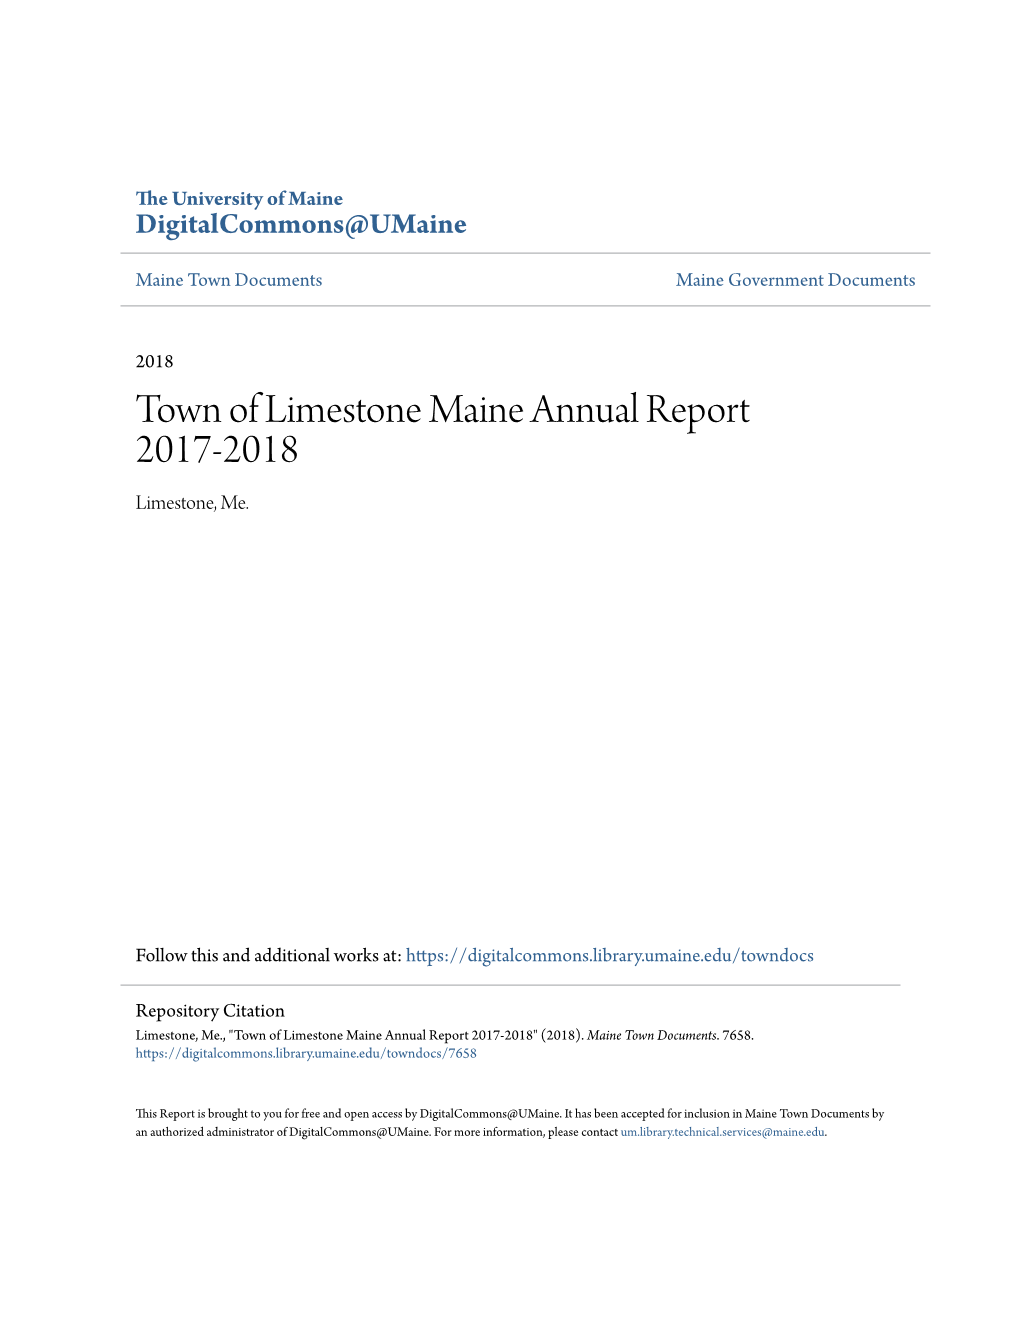 Town of Limestone Maine Annual Report 2017-2018 Limestone, Me